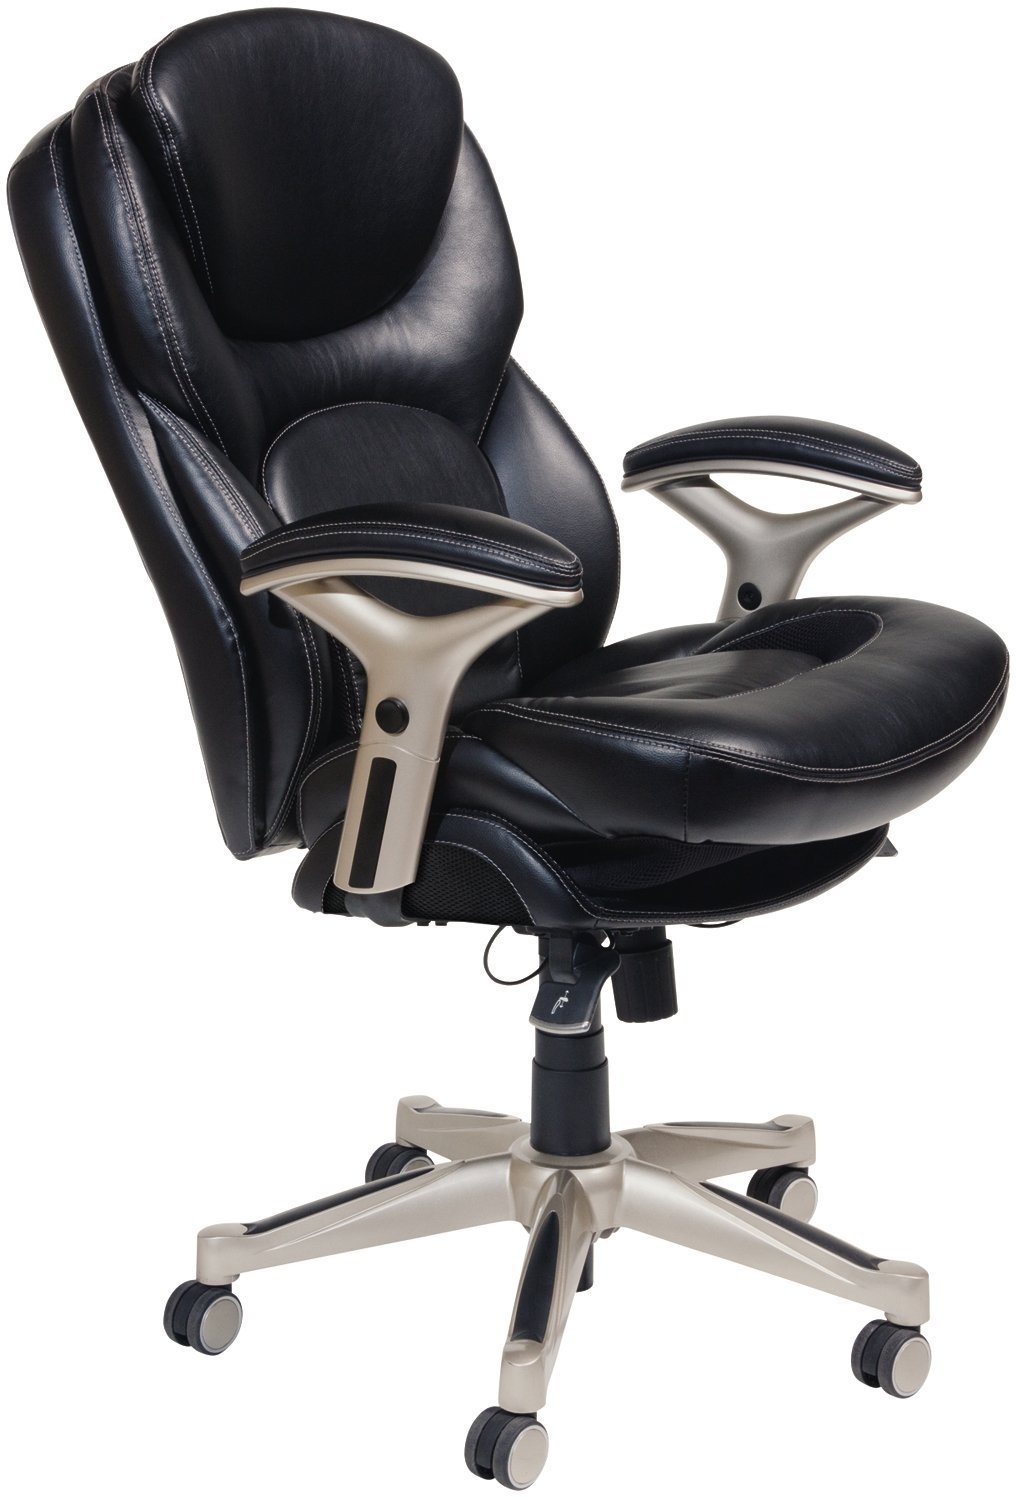 Serta 44186 Back Best Office Chair for Back Pain